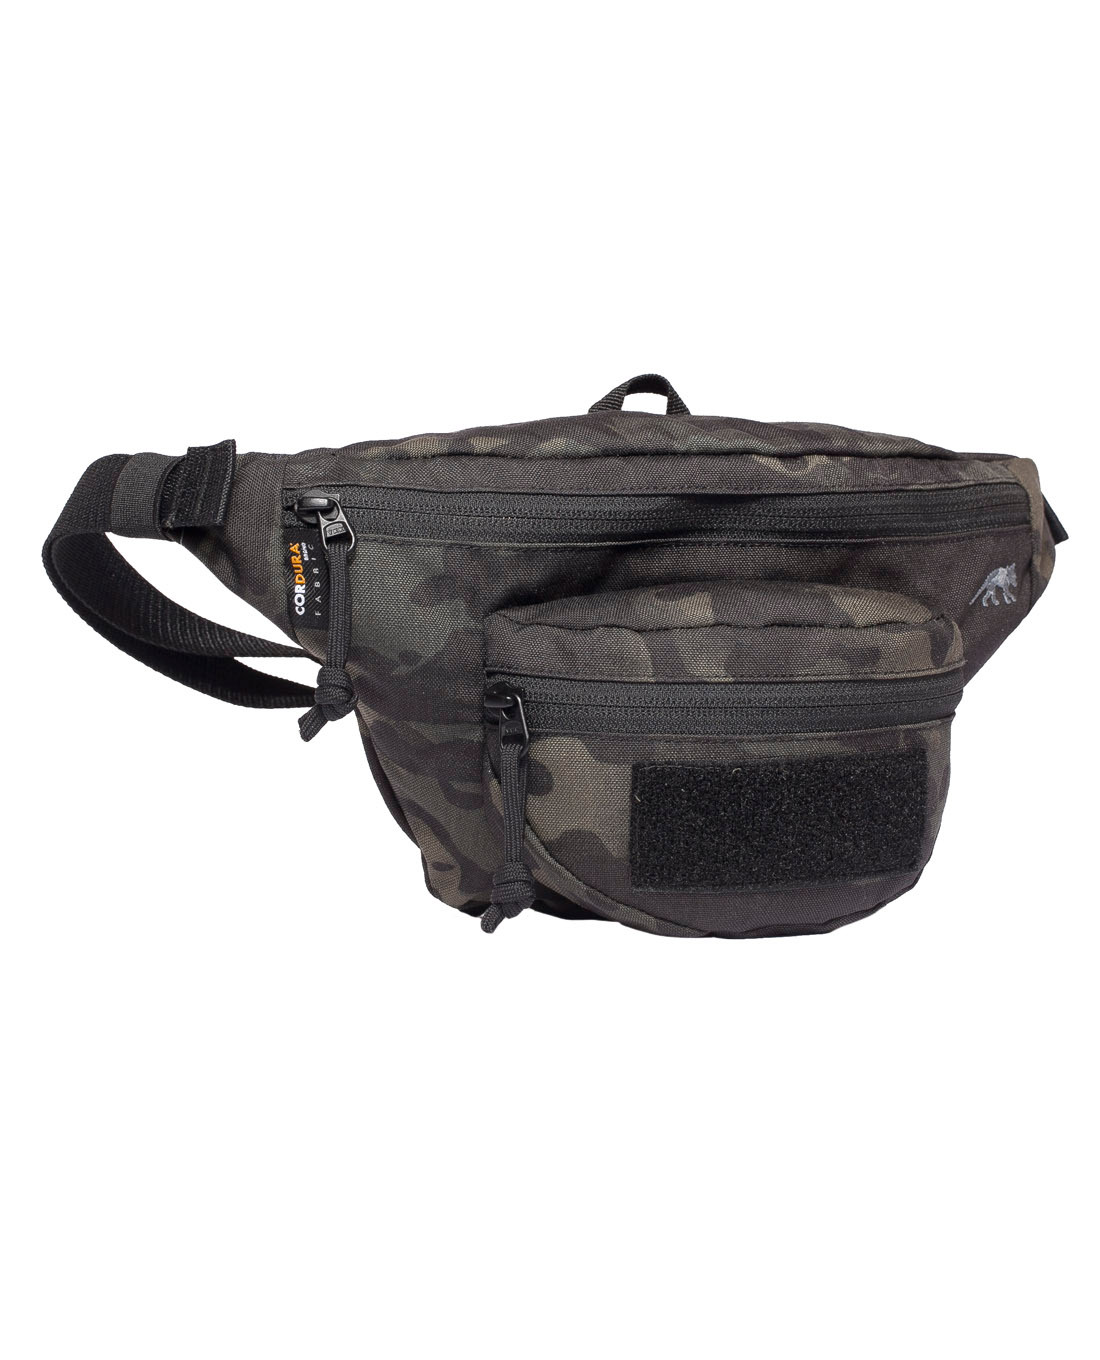 Tasmanian Tiger TT Modular Hip Bag Gürtel-Tasche Bauch-Tasche Multicam Black